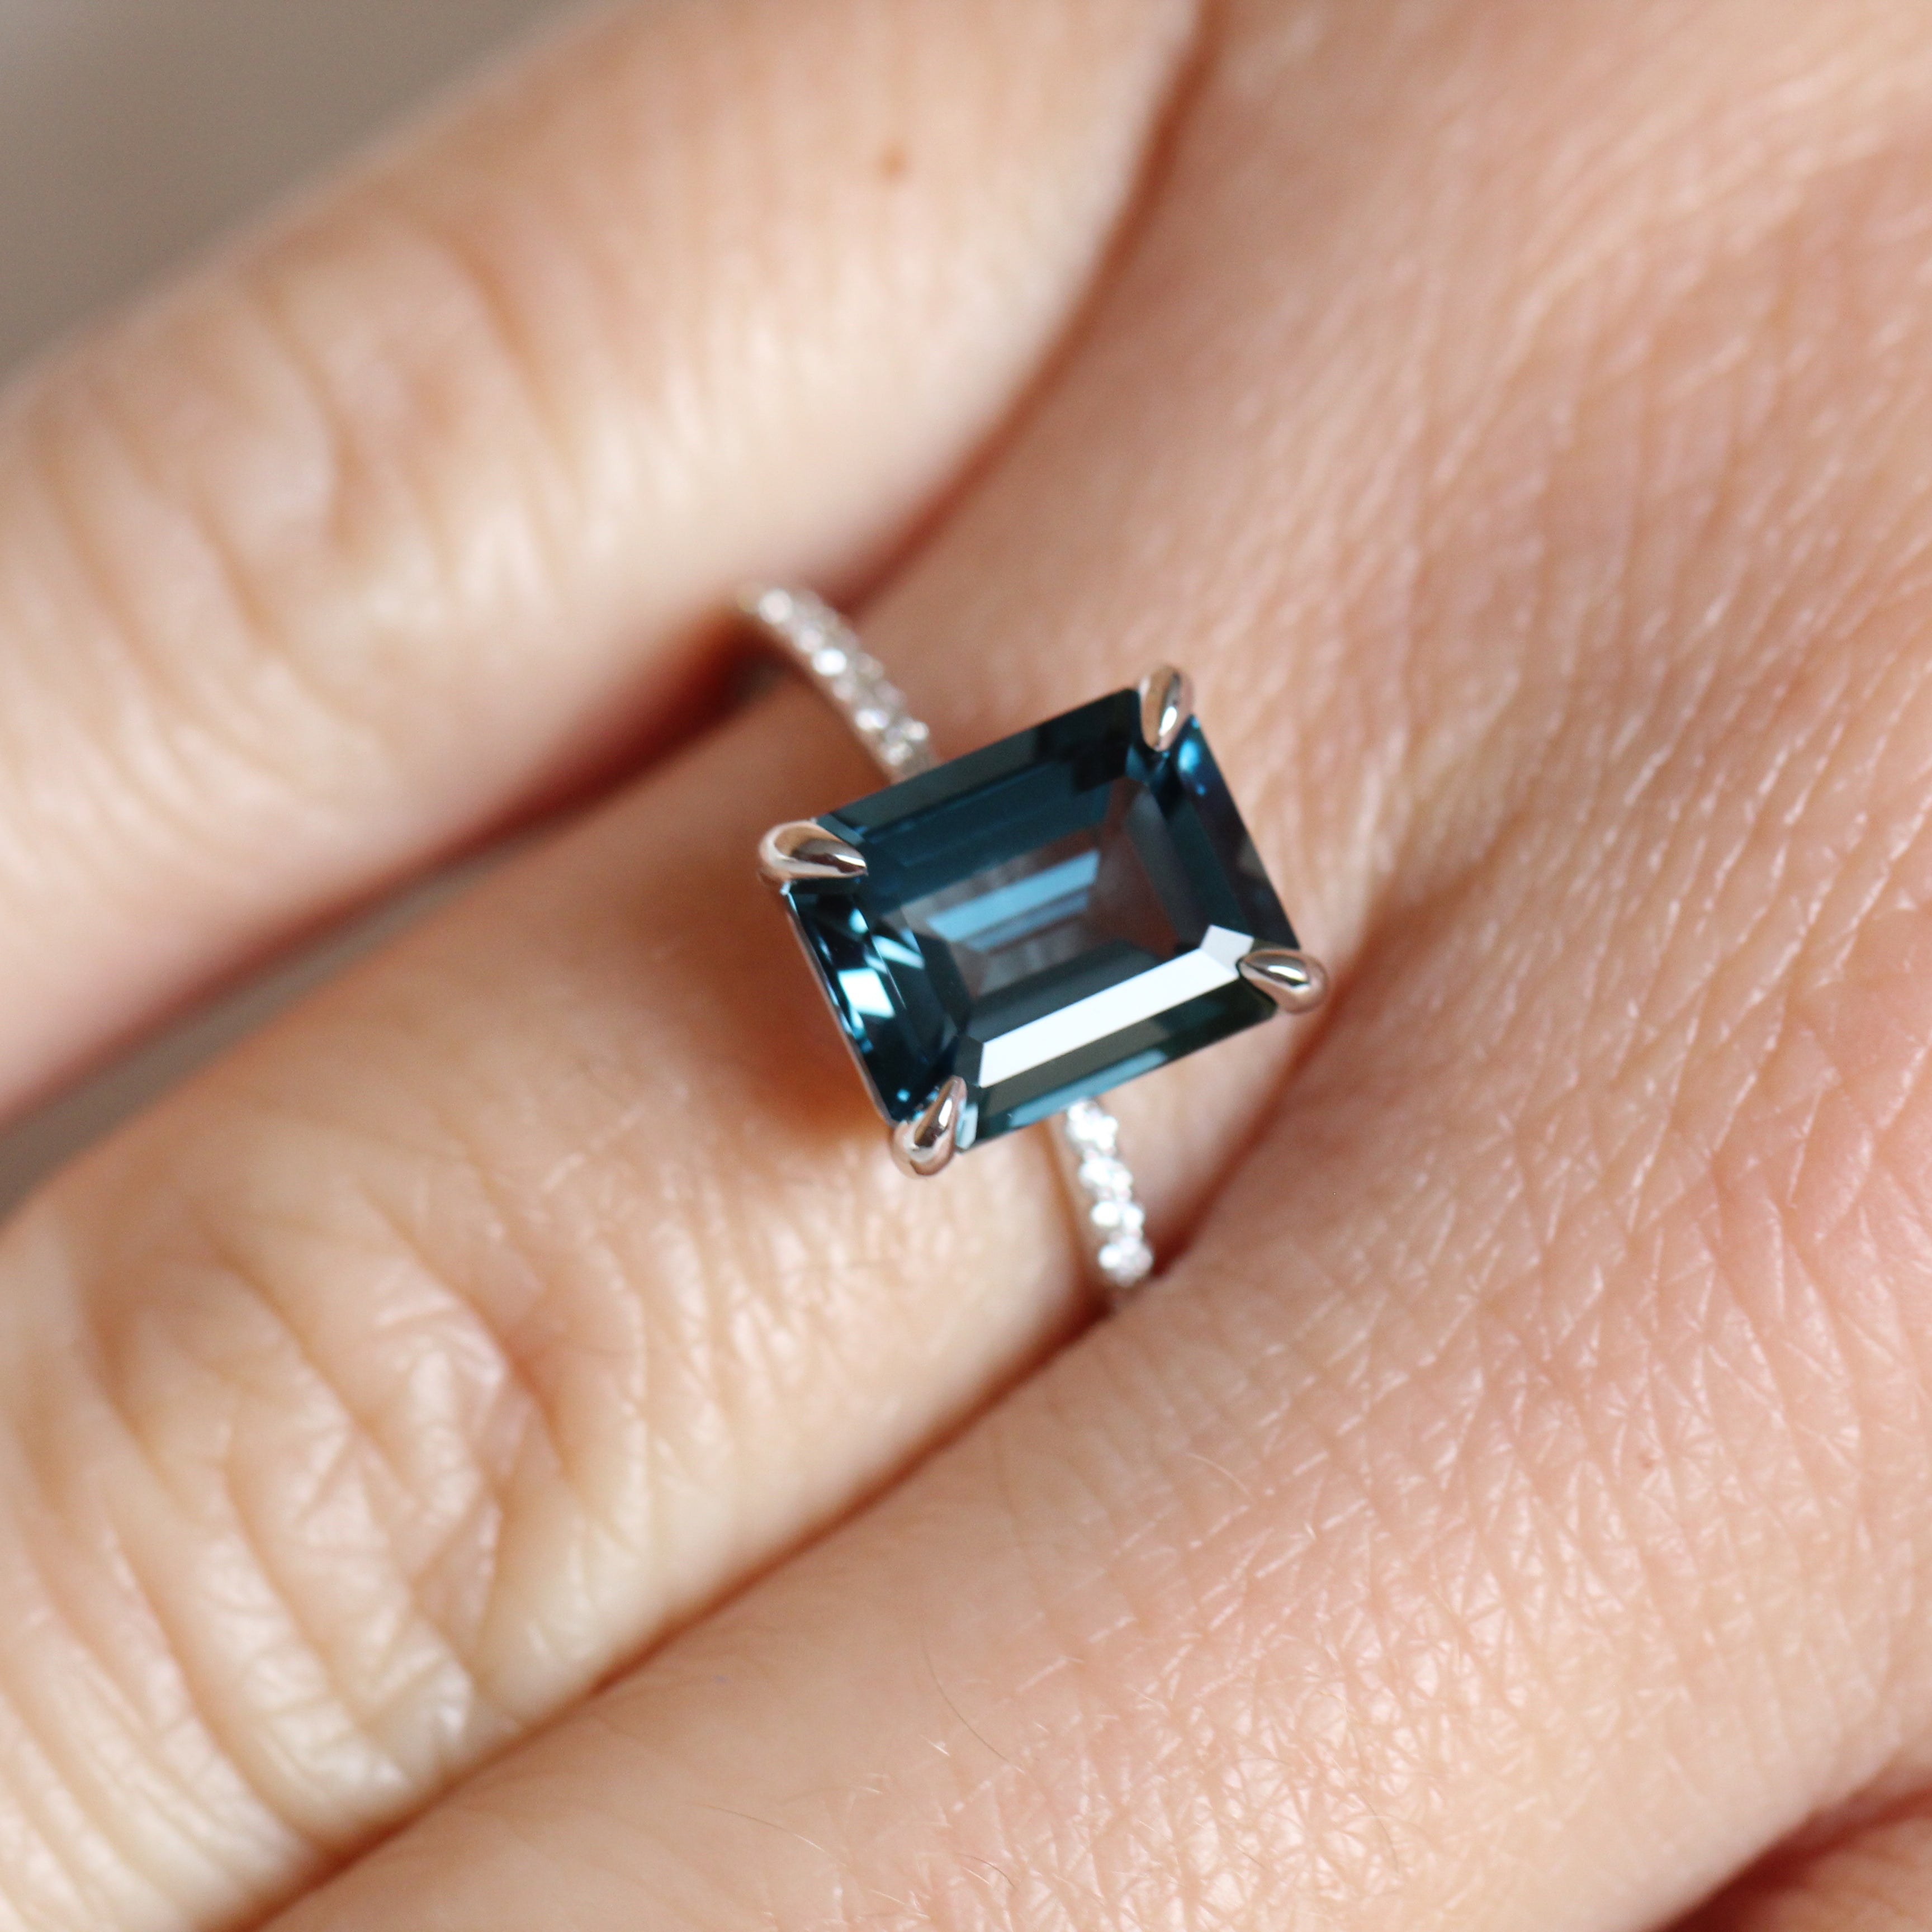 Shop Semi Precious Gemstone Rings - Brilliant Earth